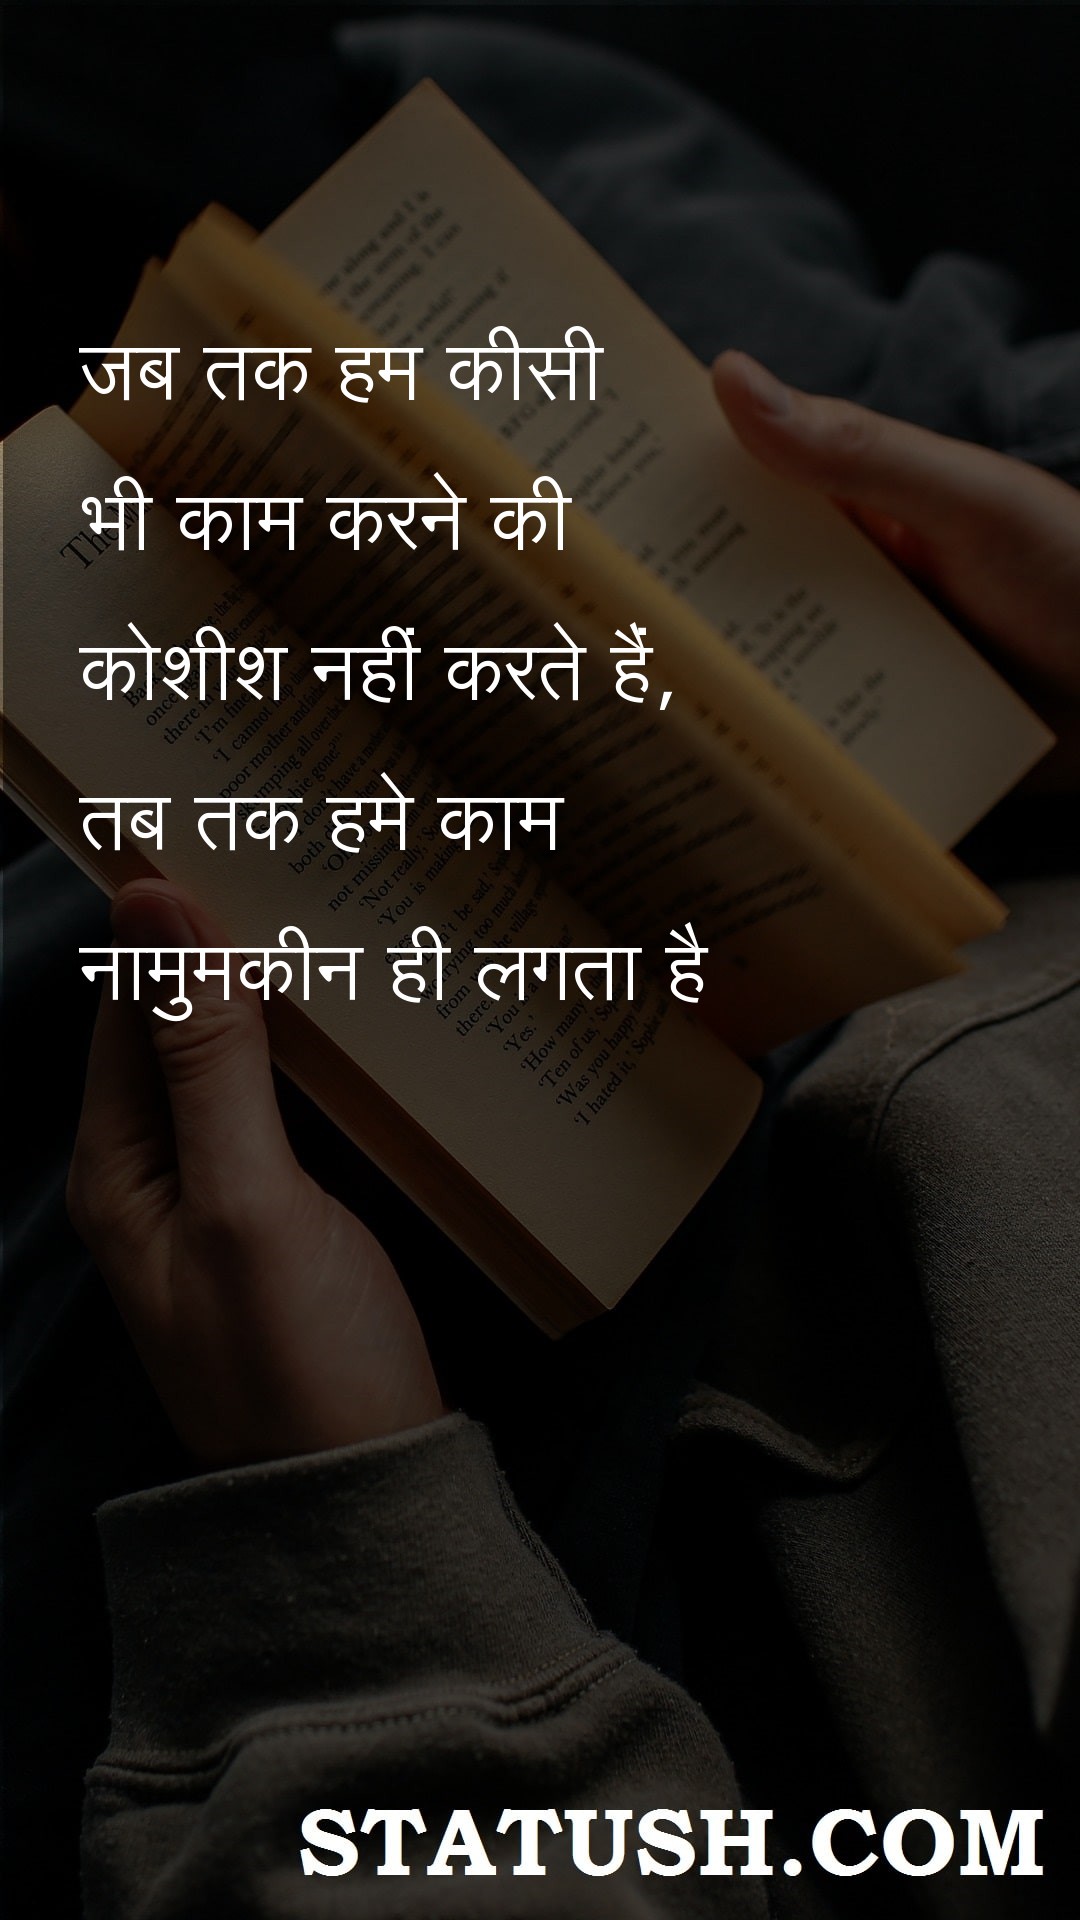 As long as we do not try Hindi Quotes at statush.com